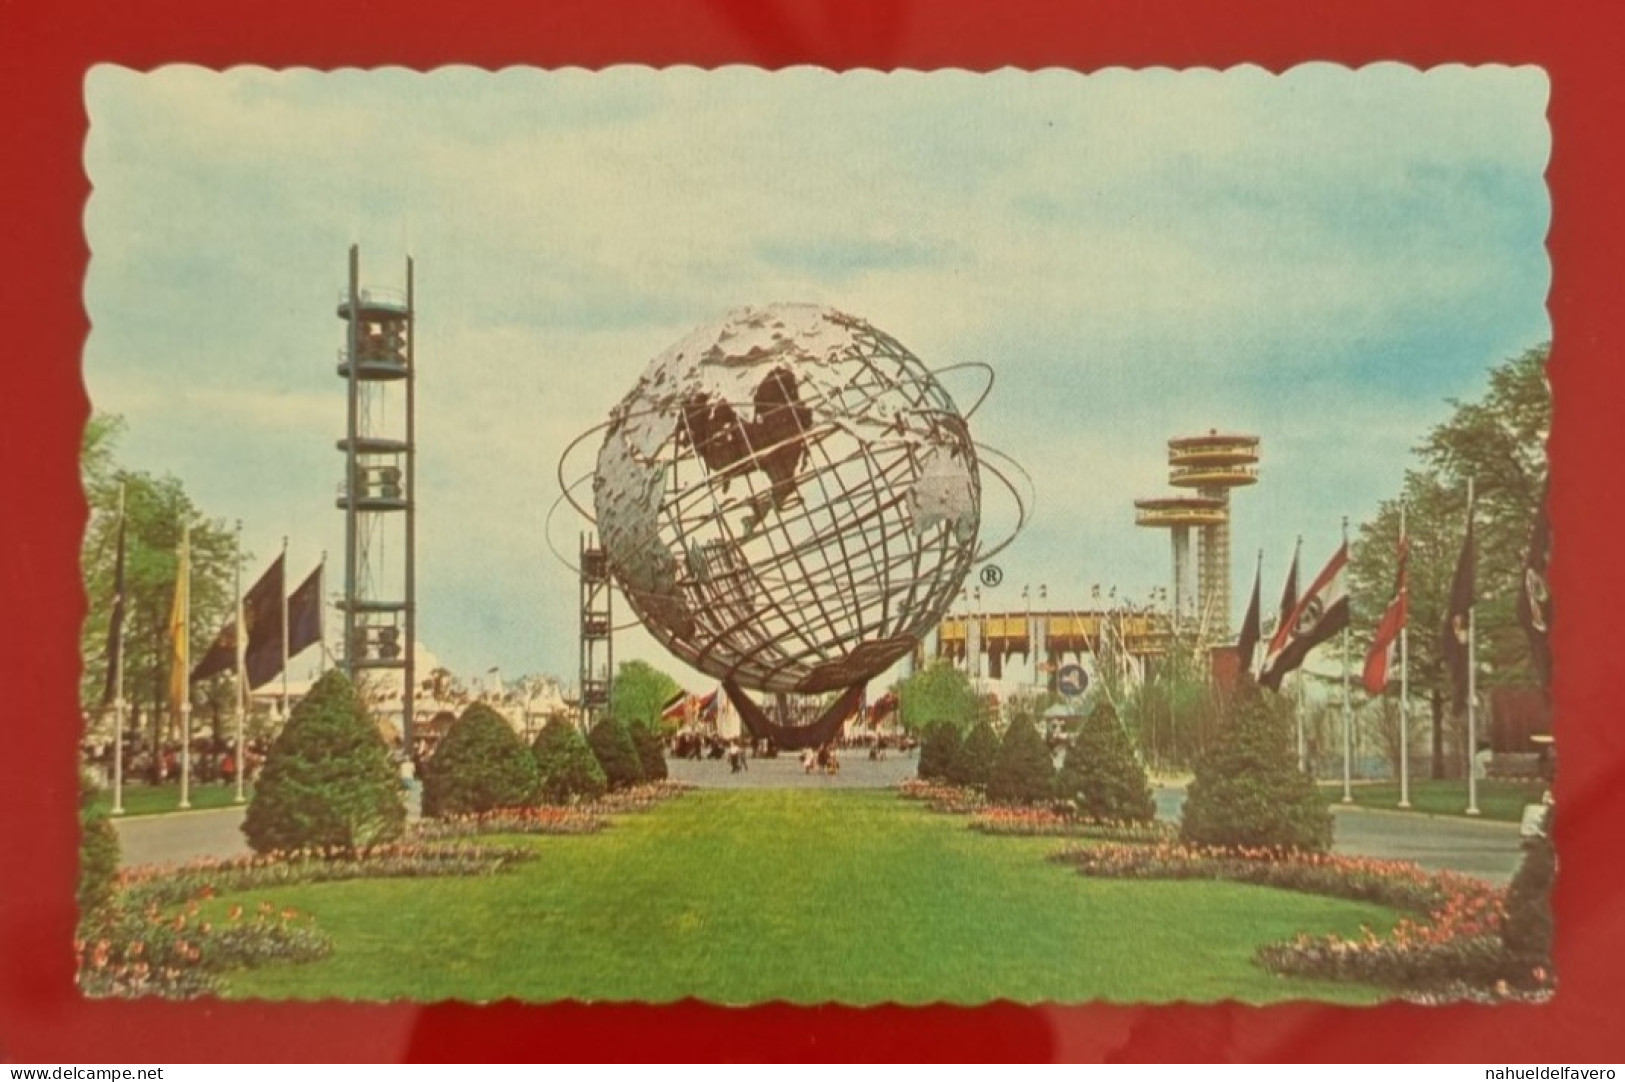 Uncirculated Postcard - USA - NY, NEW YORK WORLD'S FAIR 1964-65 - UNISPHERE - Expositions